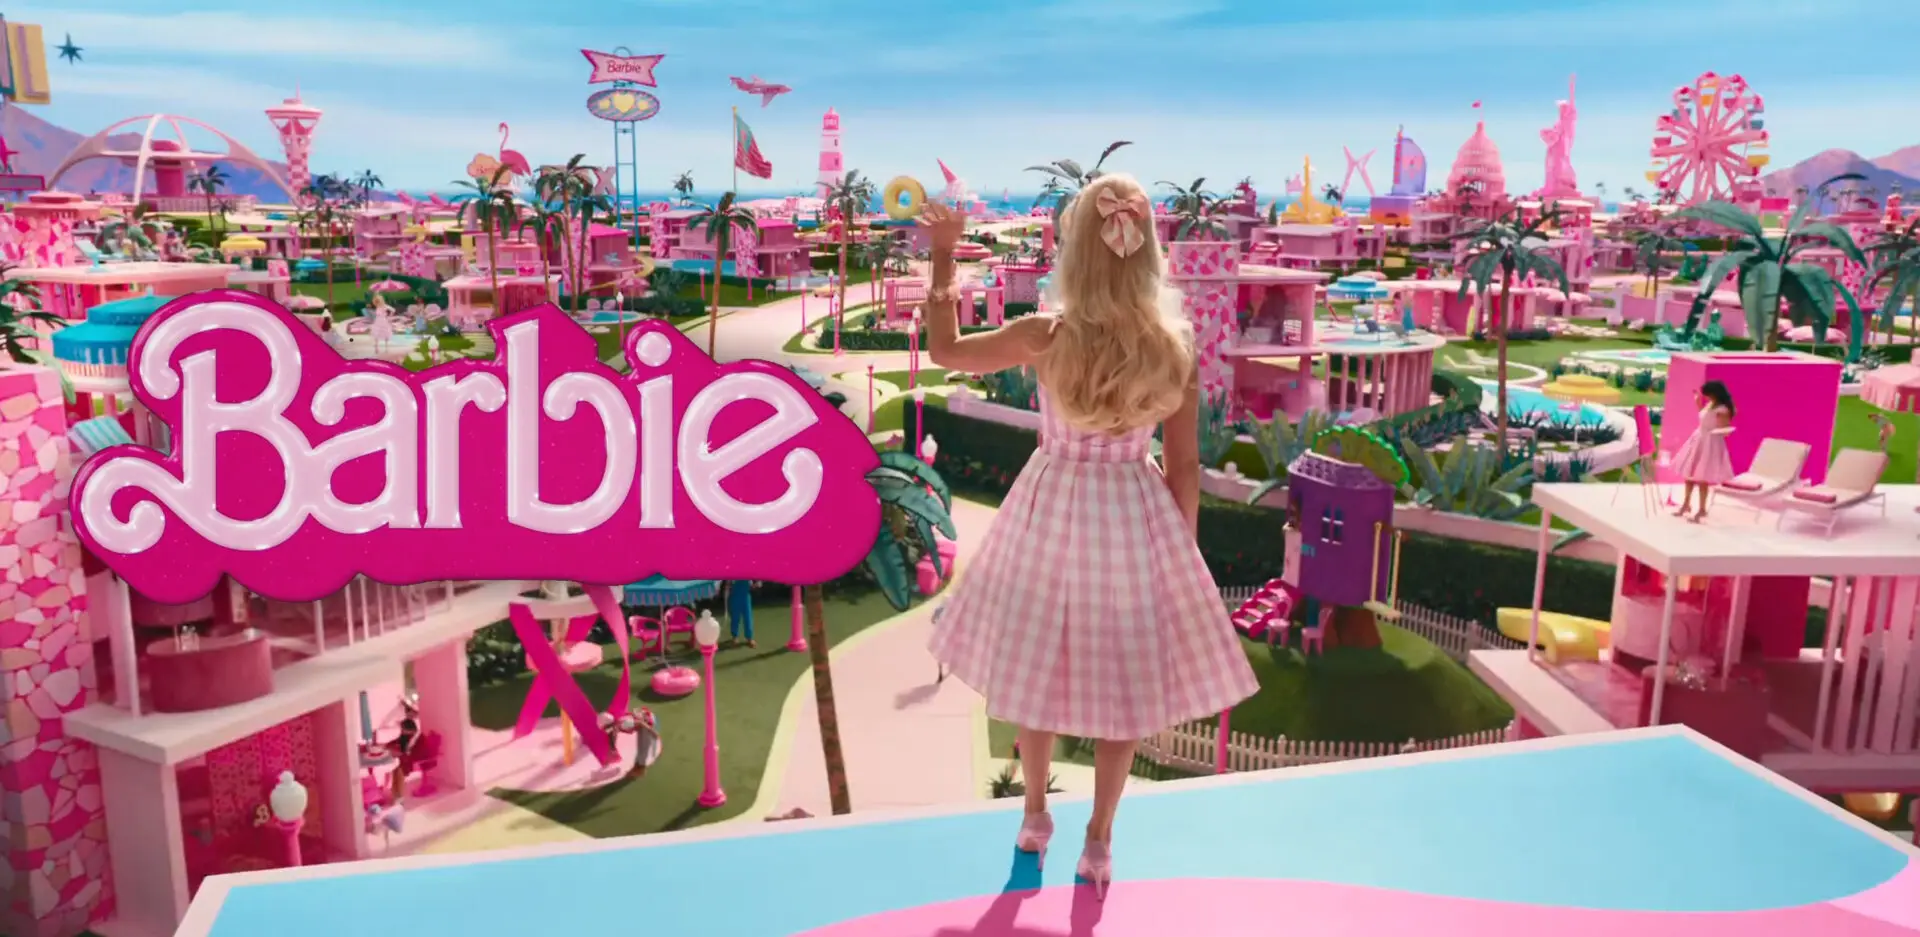 barbie movie teaser banner1